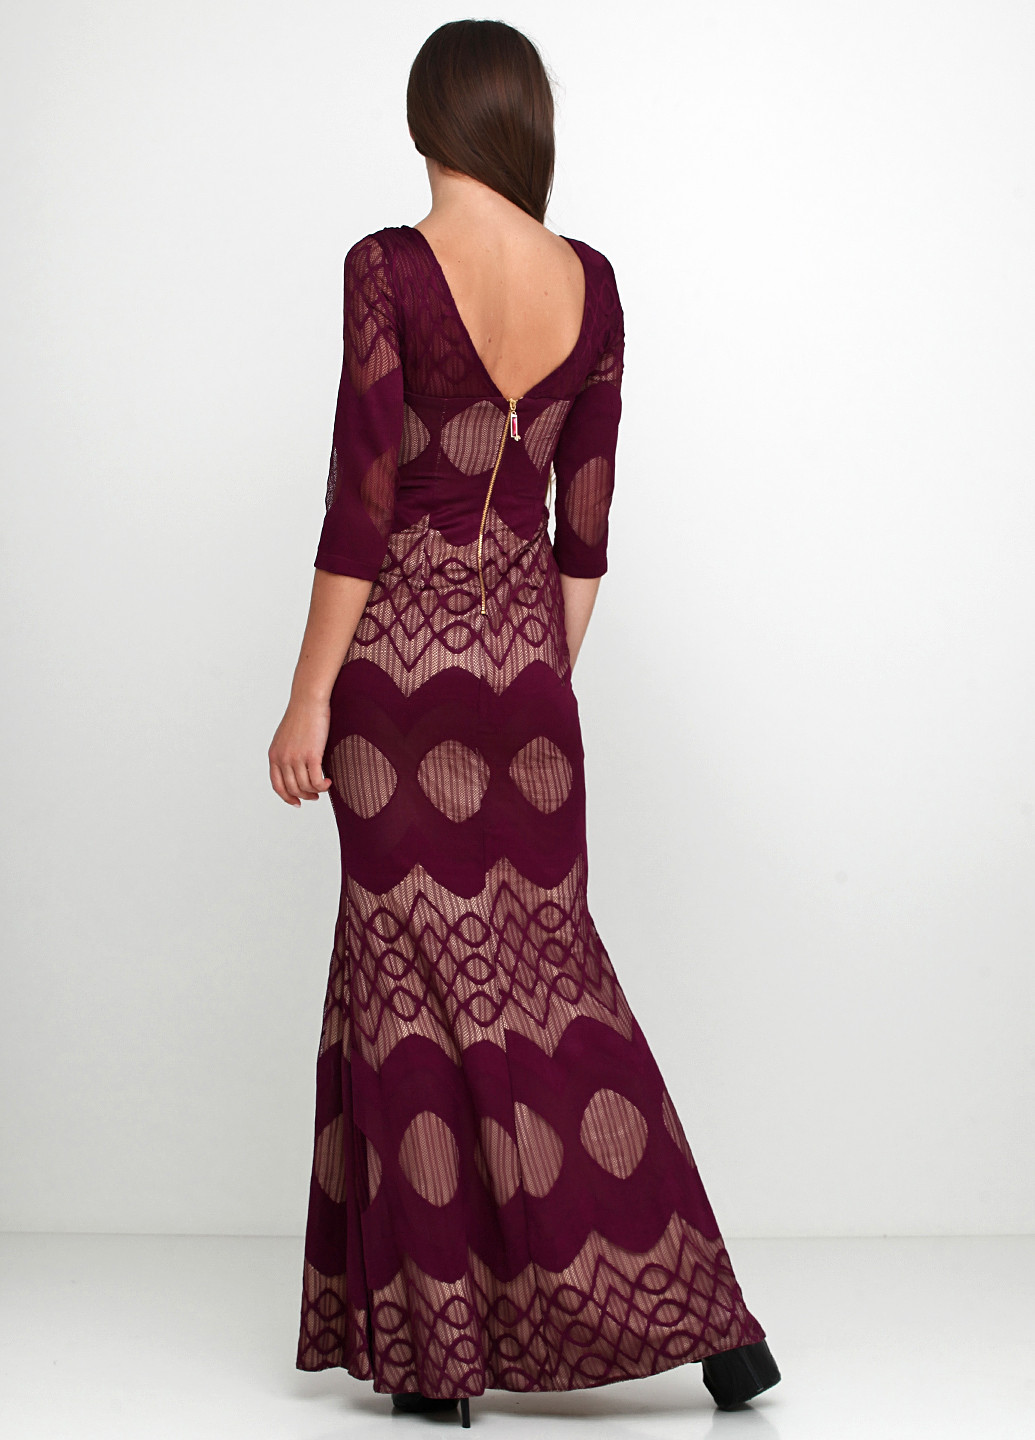 Темно-Фіолетова вечірня сукня годе, довга Imperial фактурна